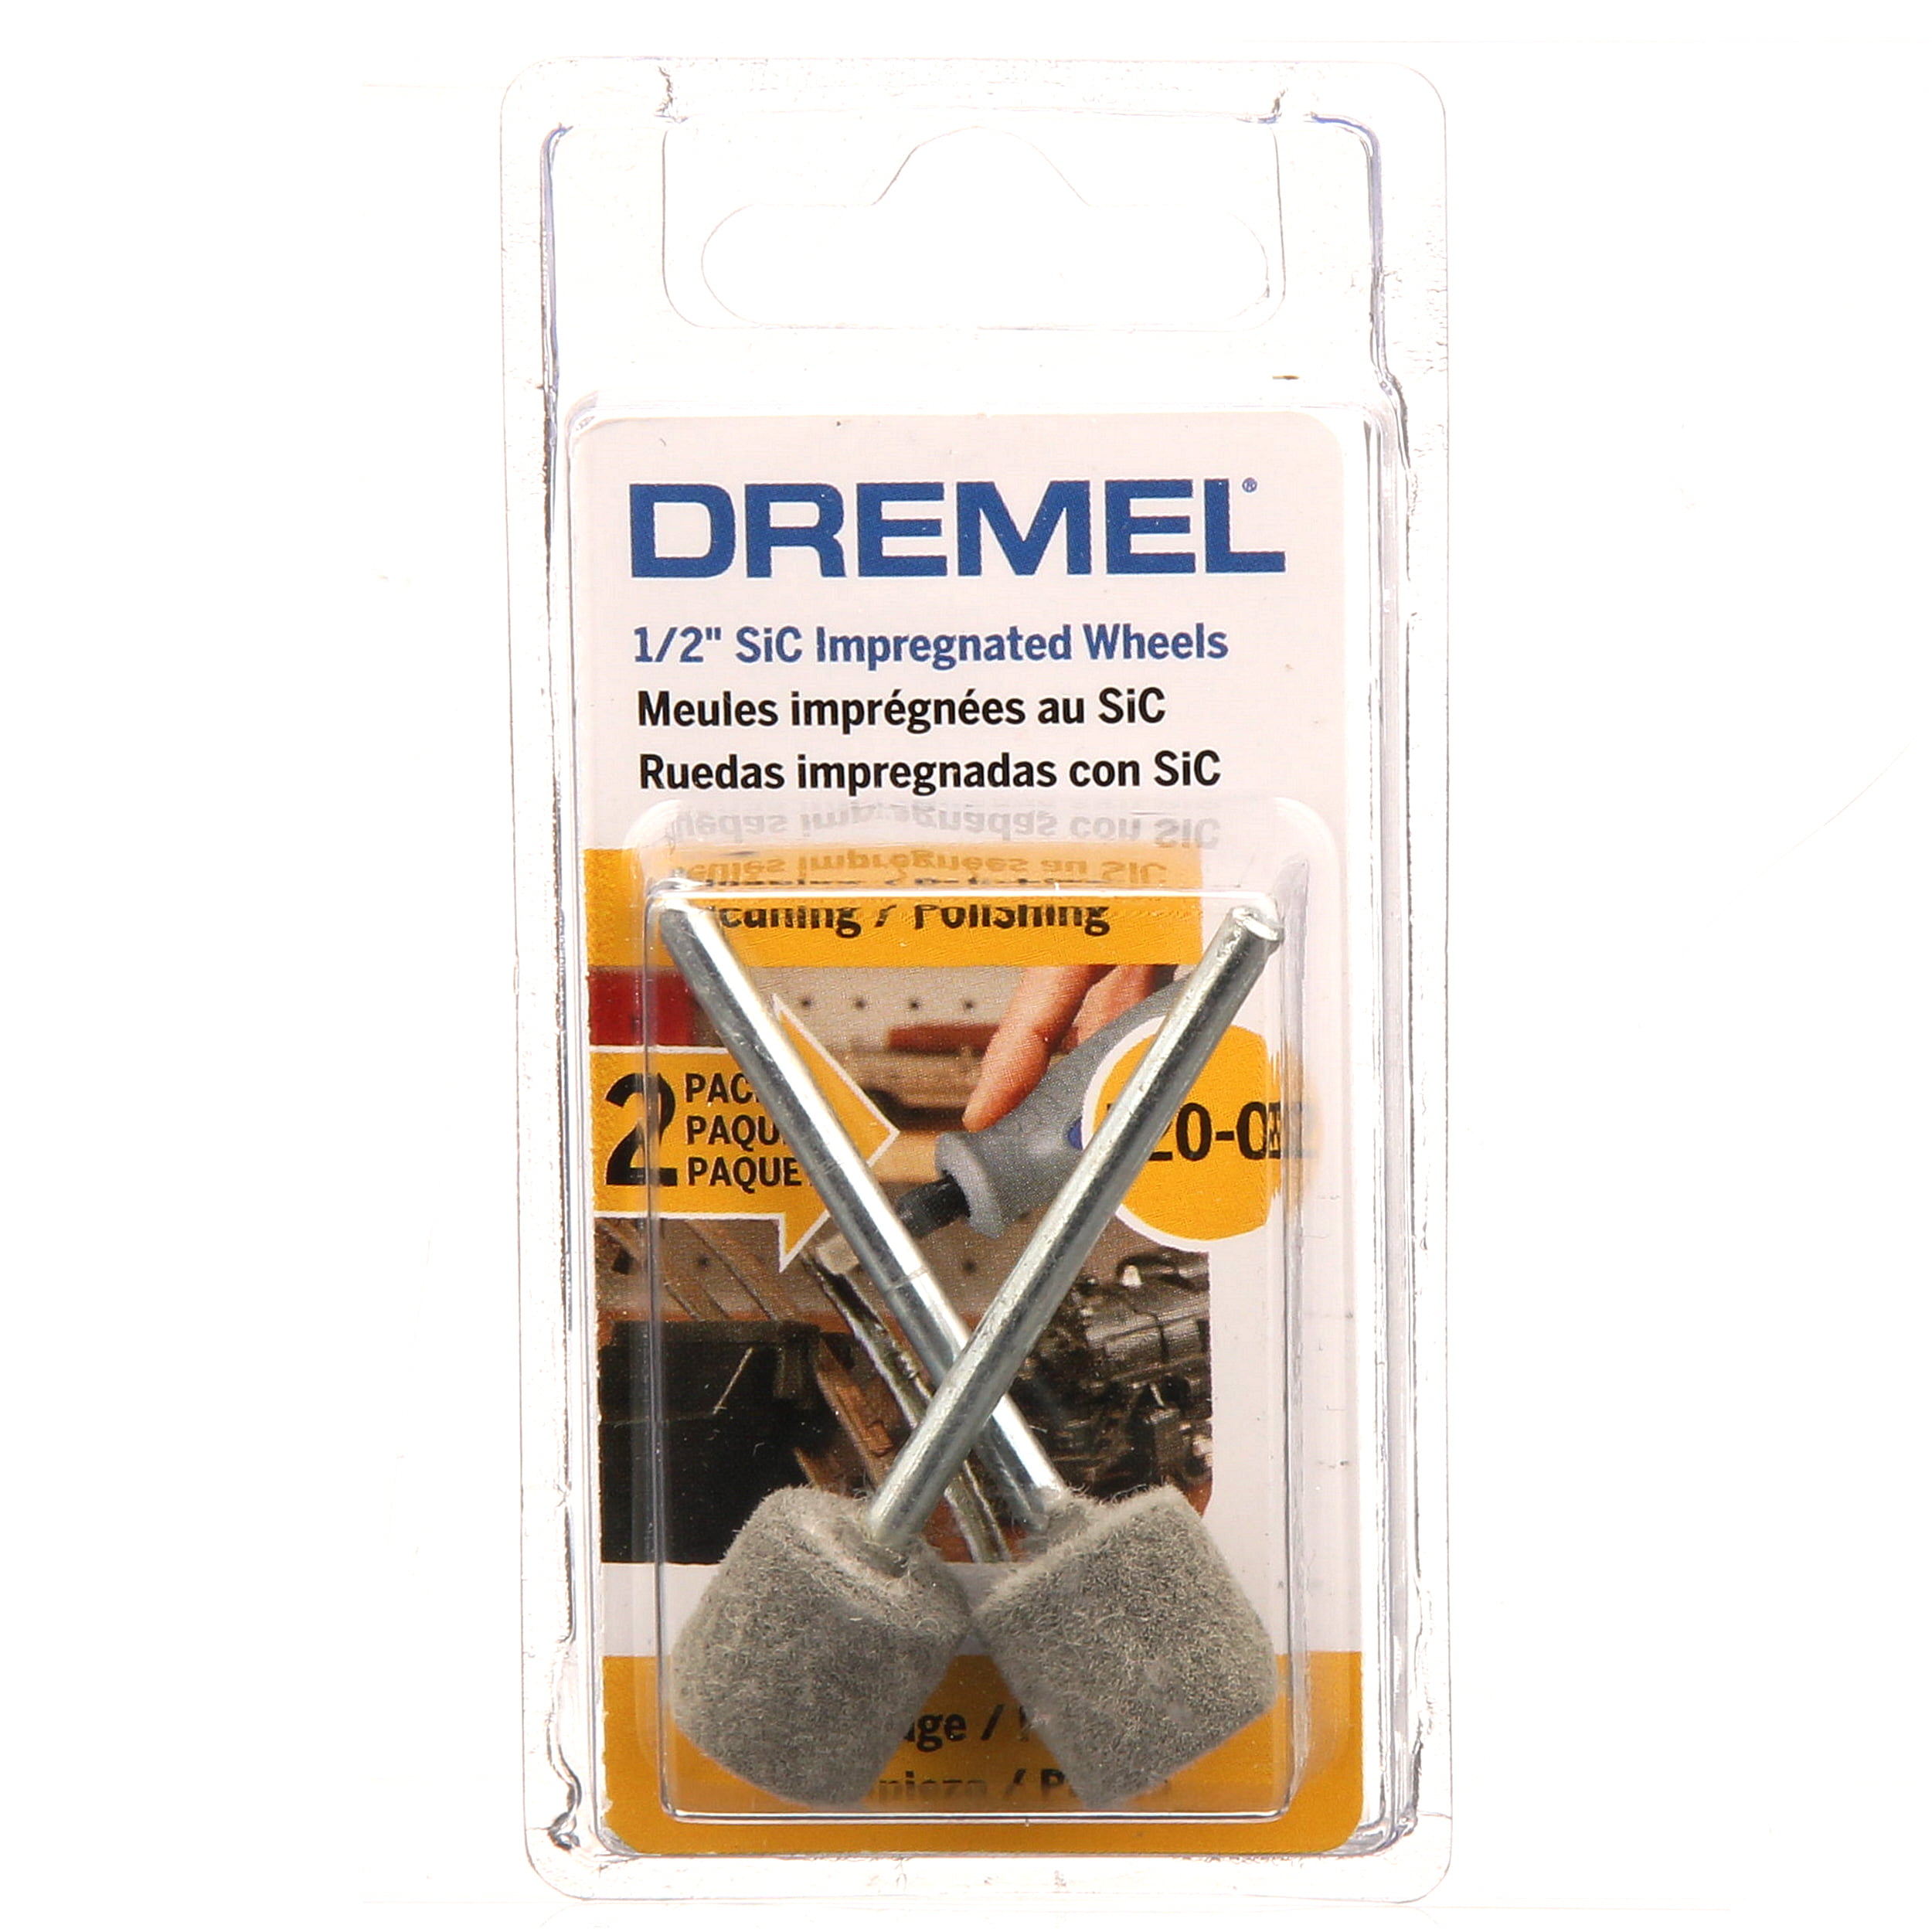 2 Pack 1/2 Dremel 520-02 SIC Impregnated Wheels